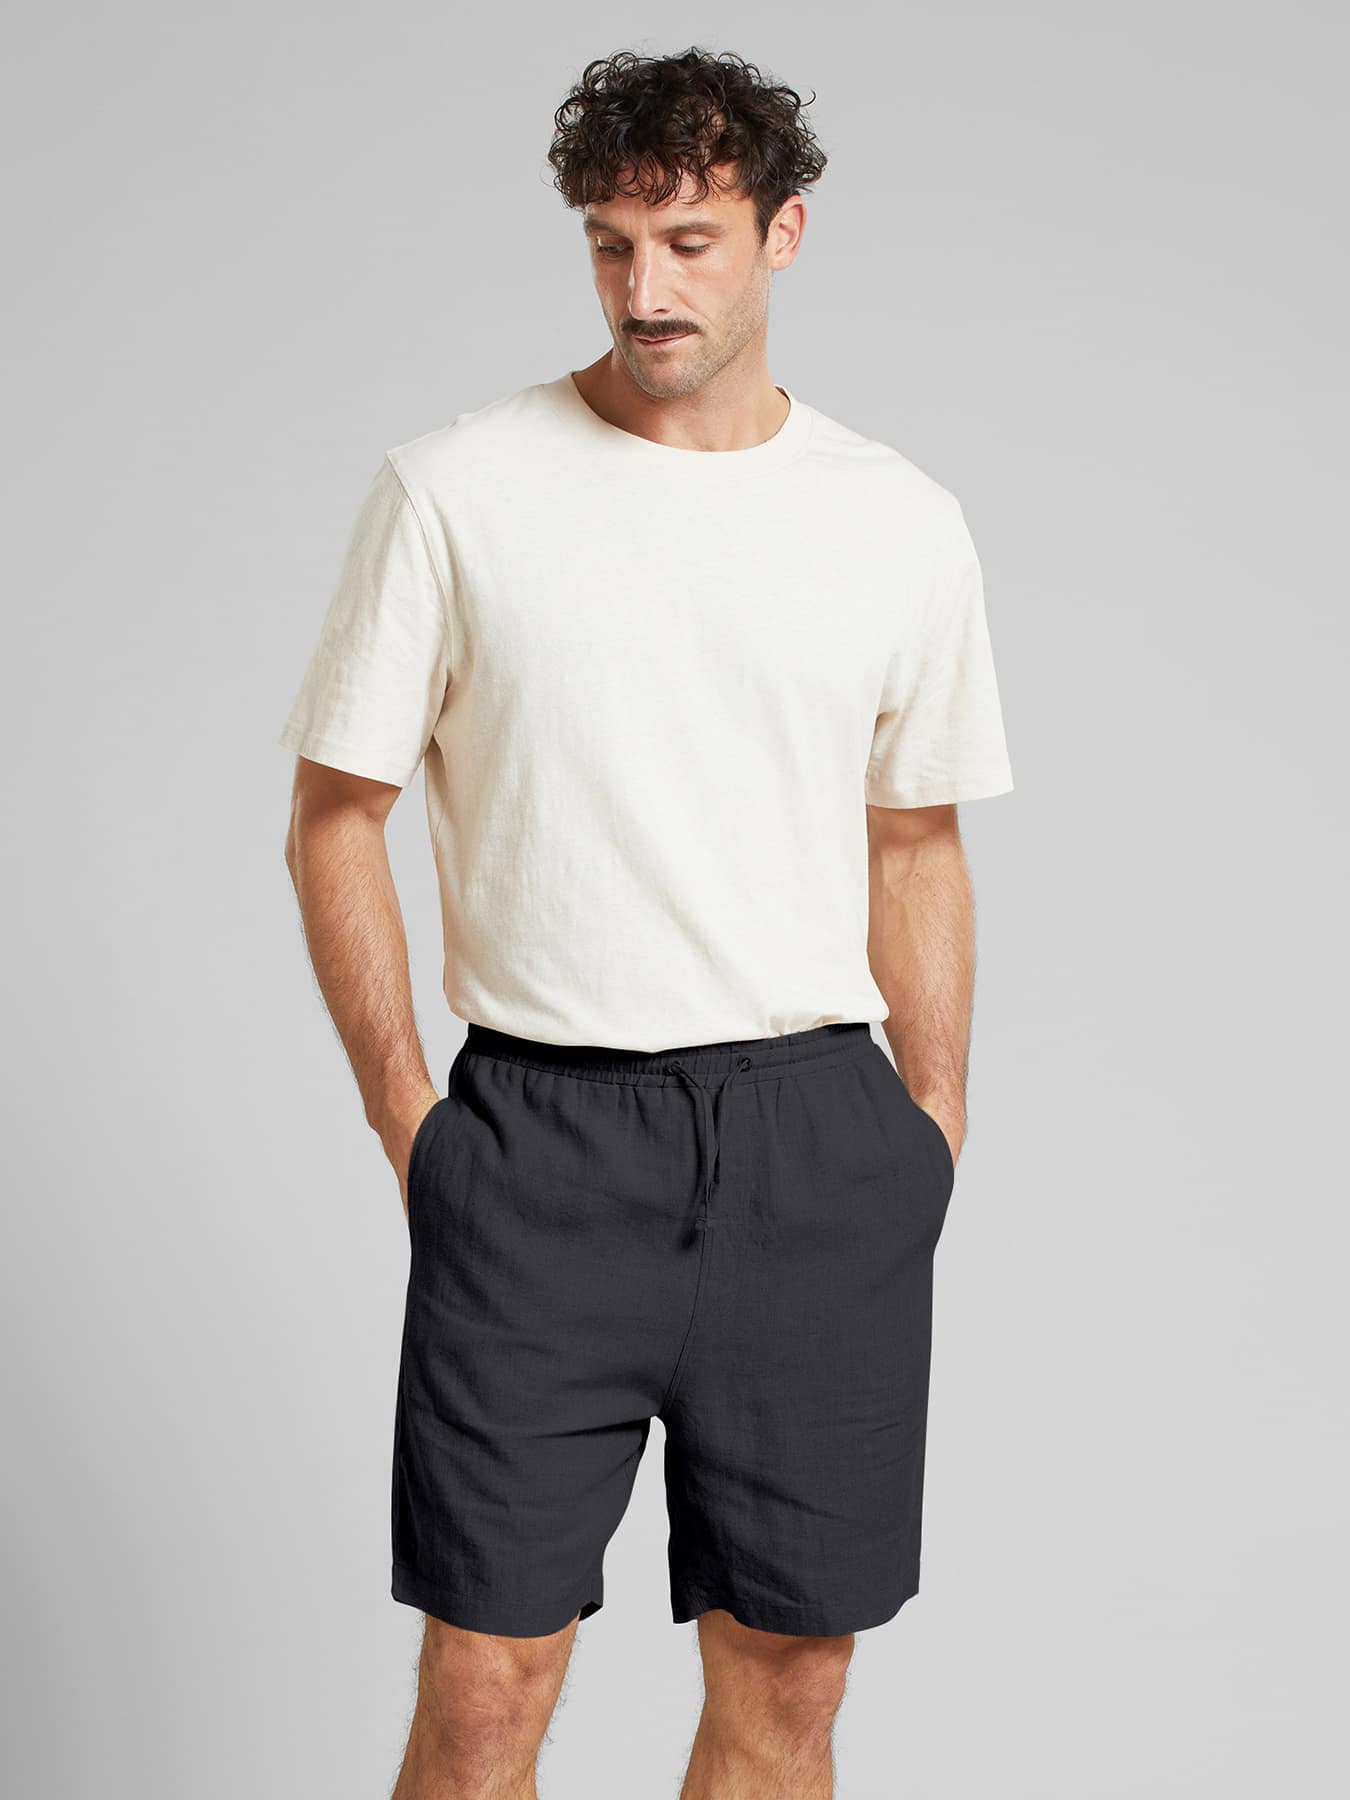 Hosen & Shorts Shorts Veijle Linen Dedicated Black Phantom 1